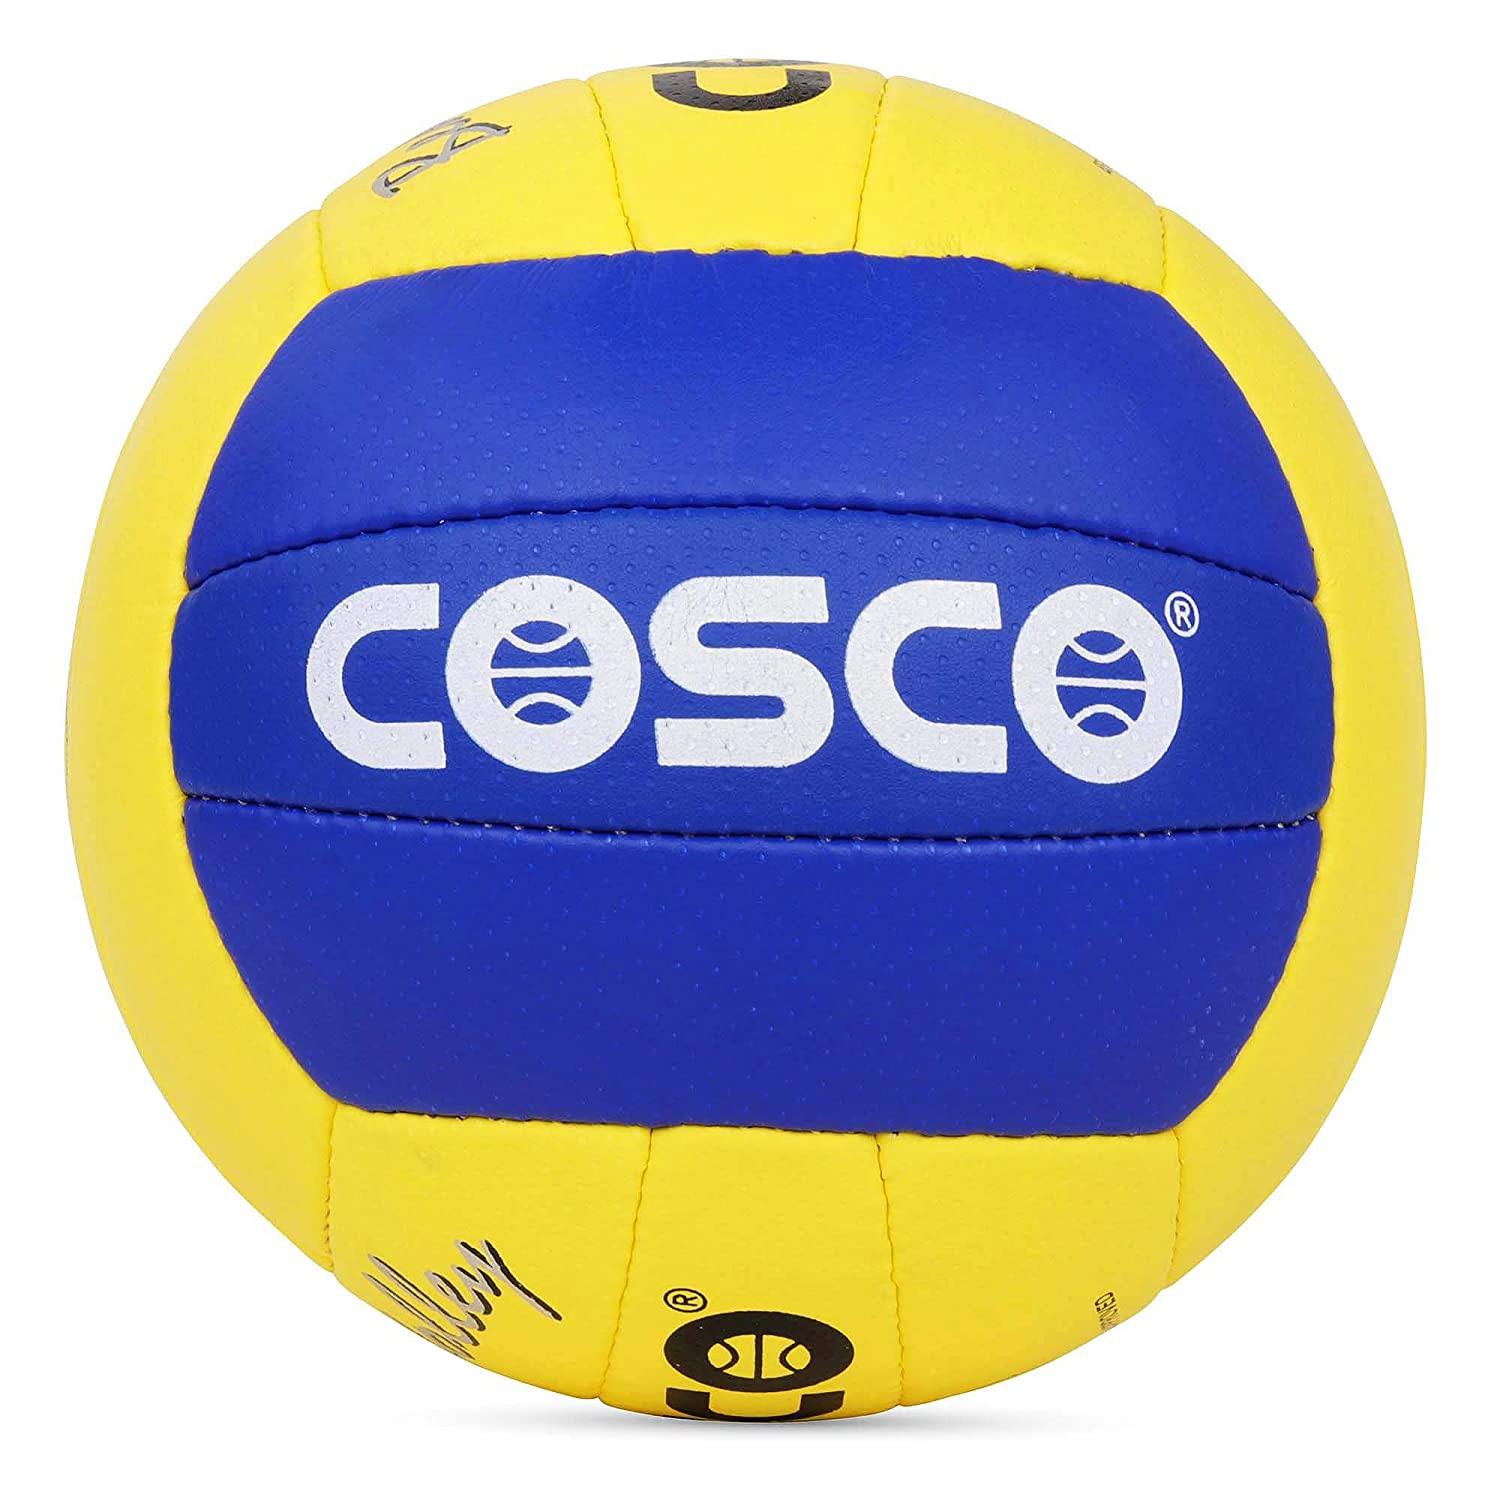 Cosco Beach Volley Ball, Size 4 - Best Price online Prokicksports.com